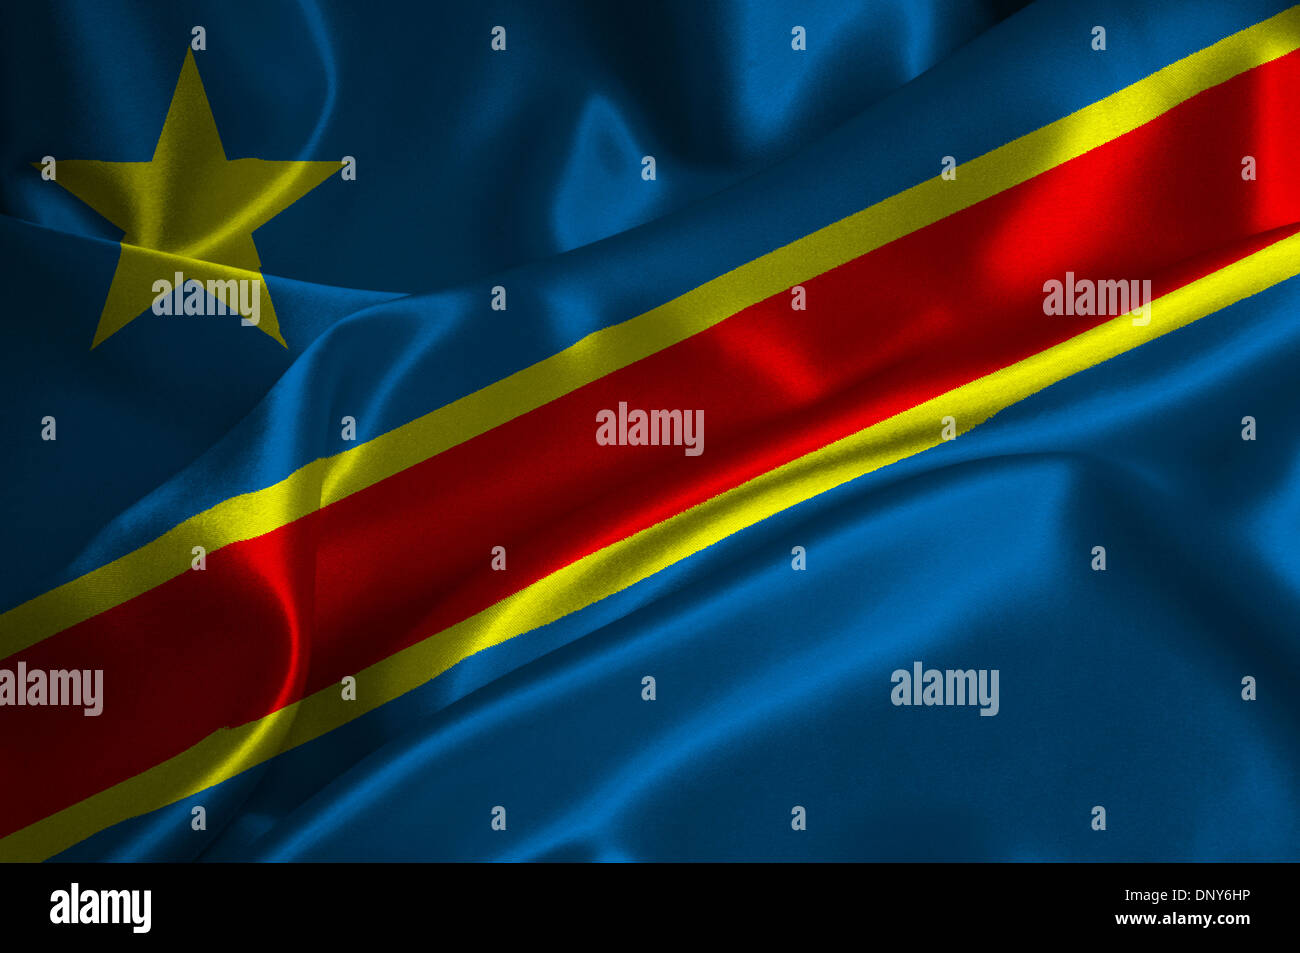 Congo Democratic Republic flag on satin texture. Stock Photo